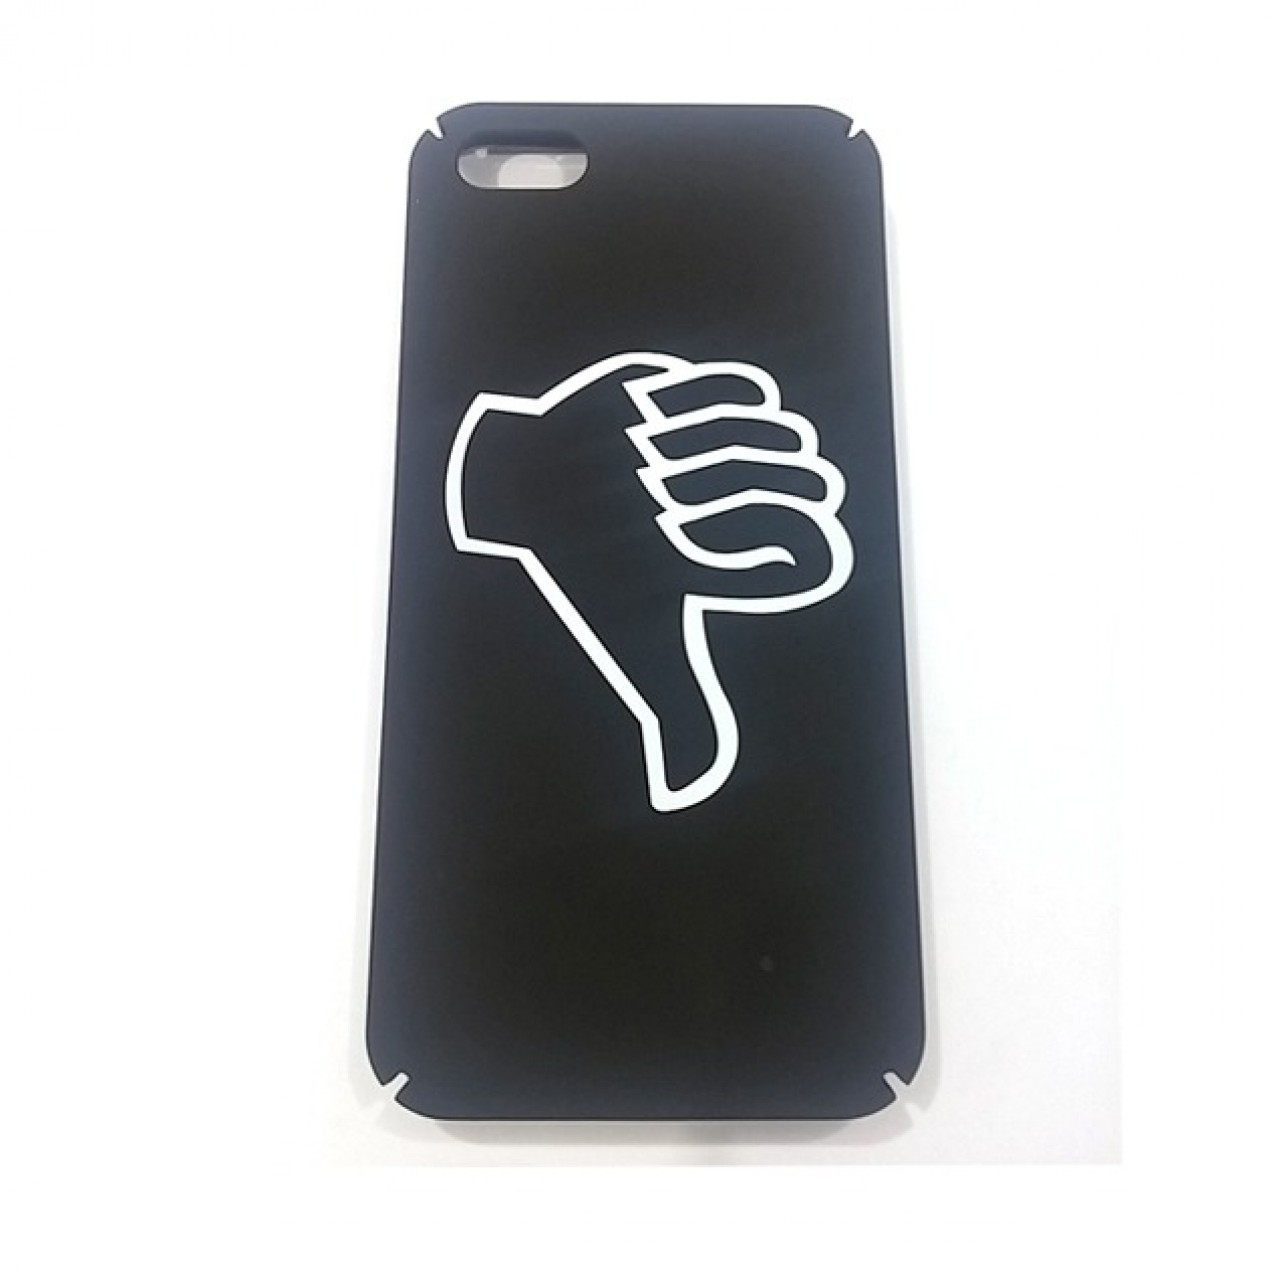 iPhone 6 Plus Thumbs Down Logo Hard Case - Black